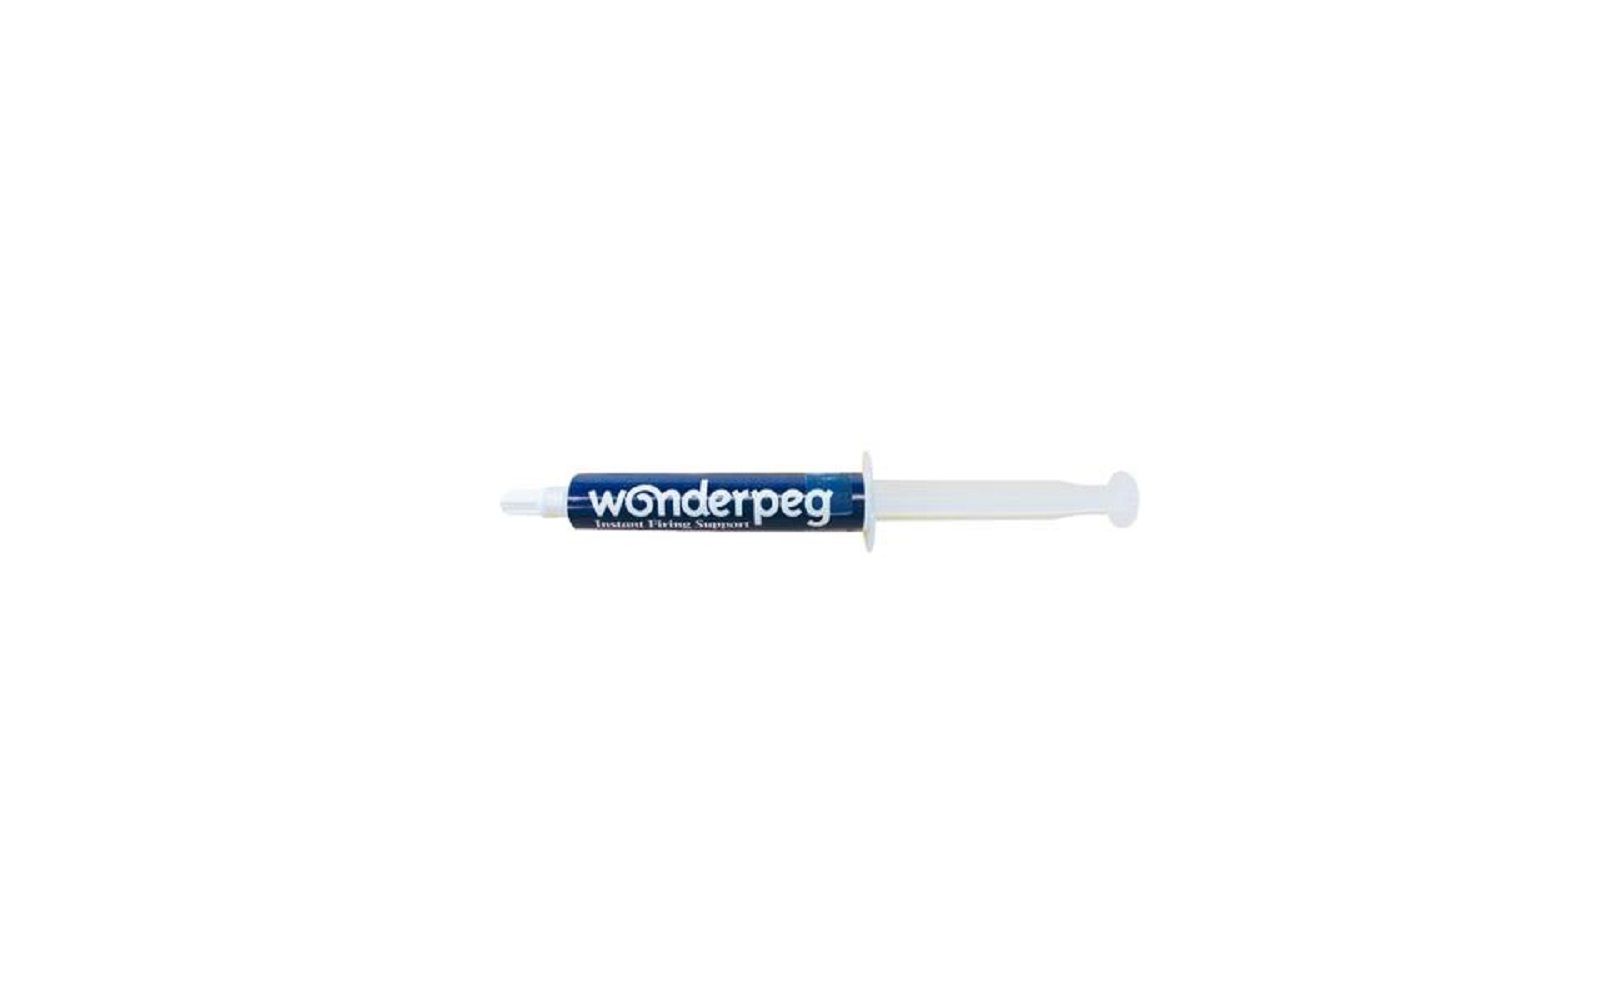 Wonderpeg instant firing support – 10 cc syringe